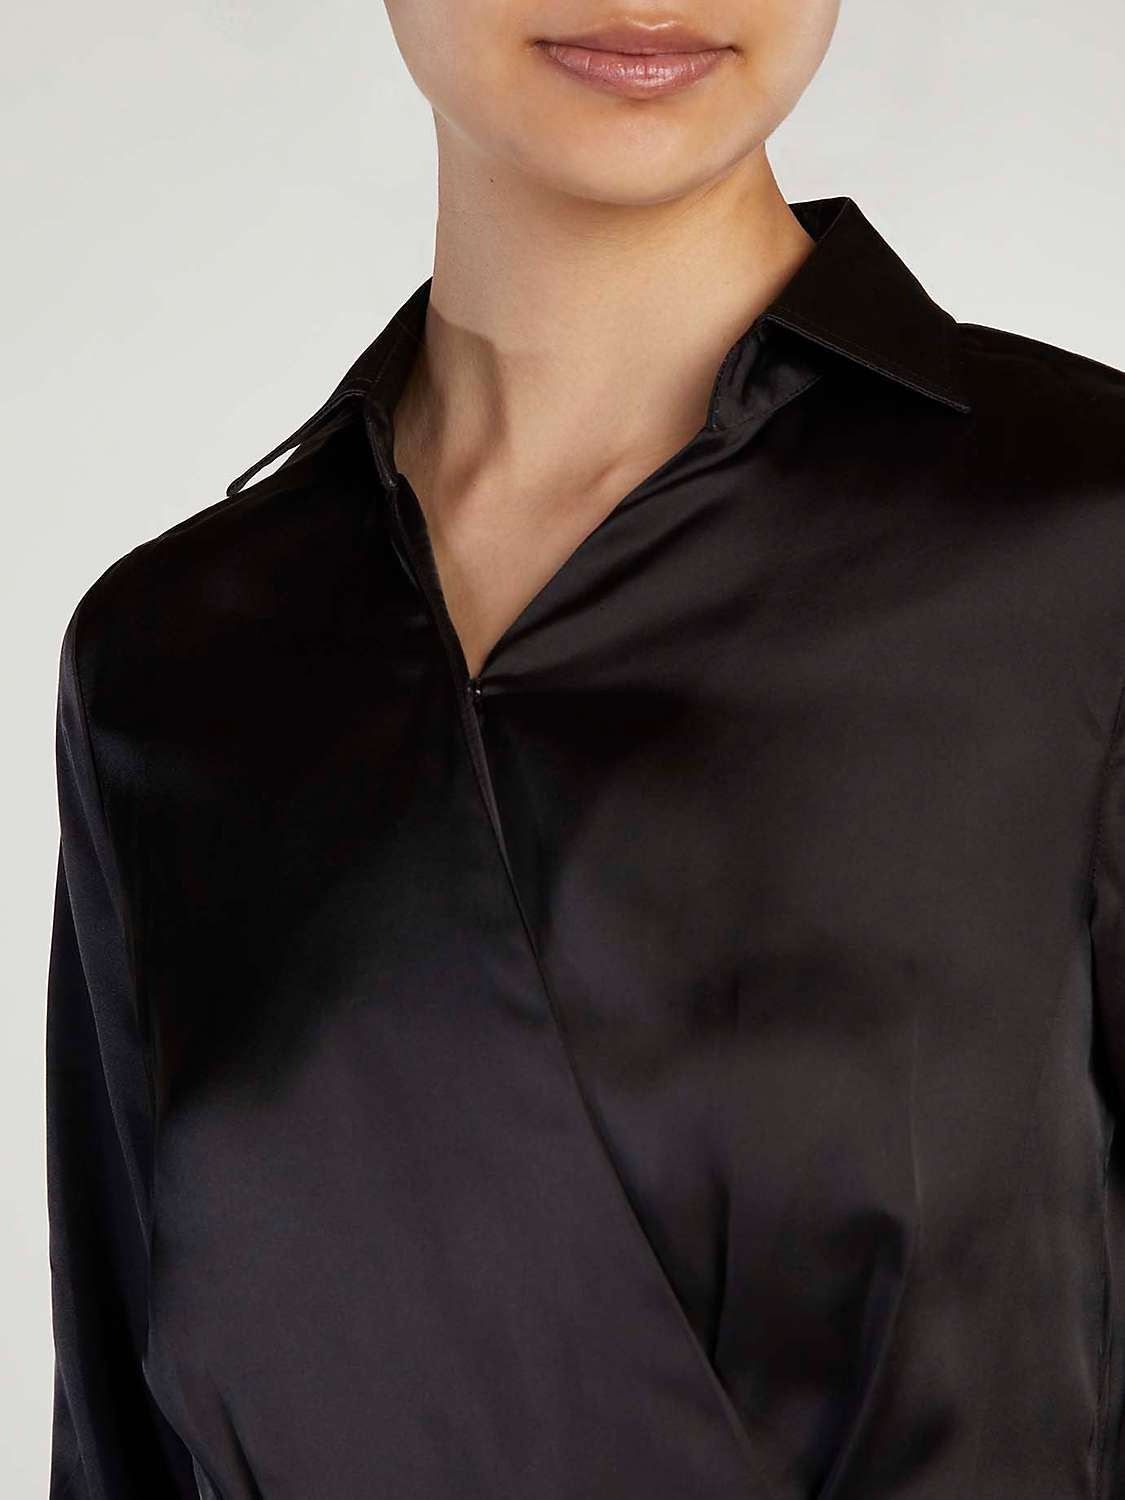 Buy Aab Satin Side Wrap Maxi Dress, Black Online at johnlewis.com